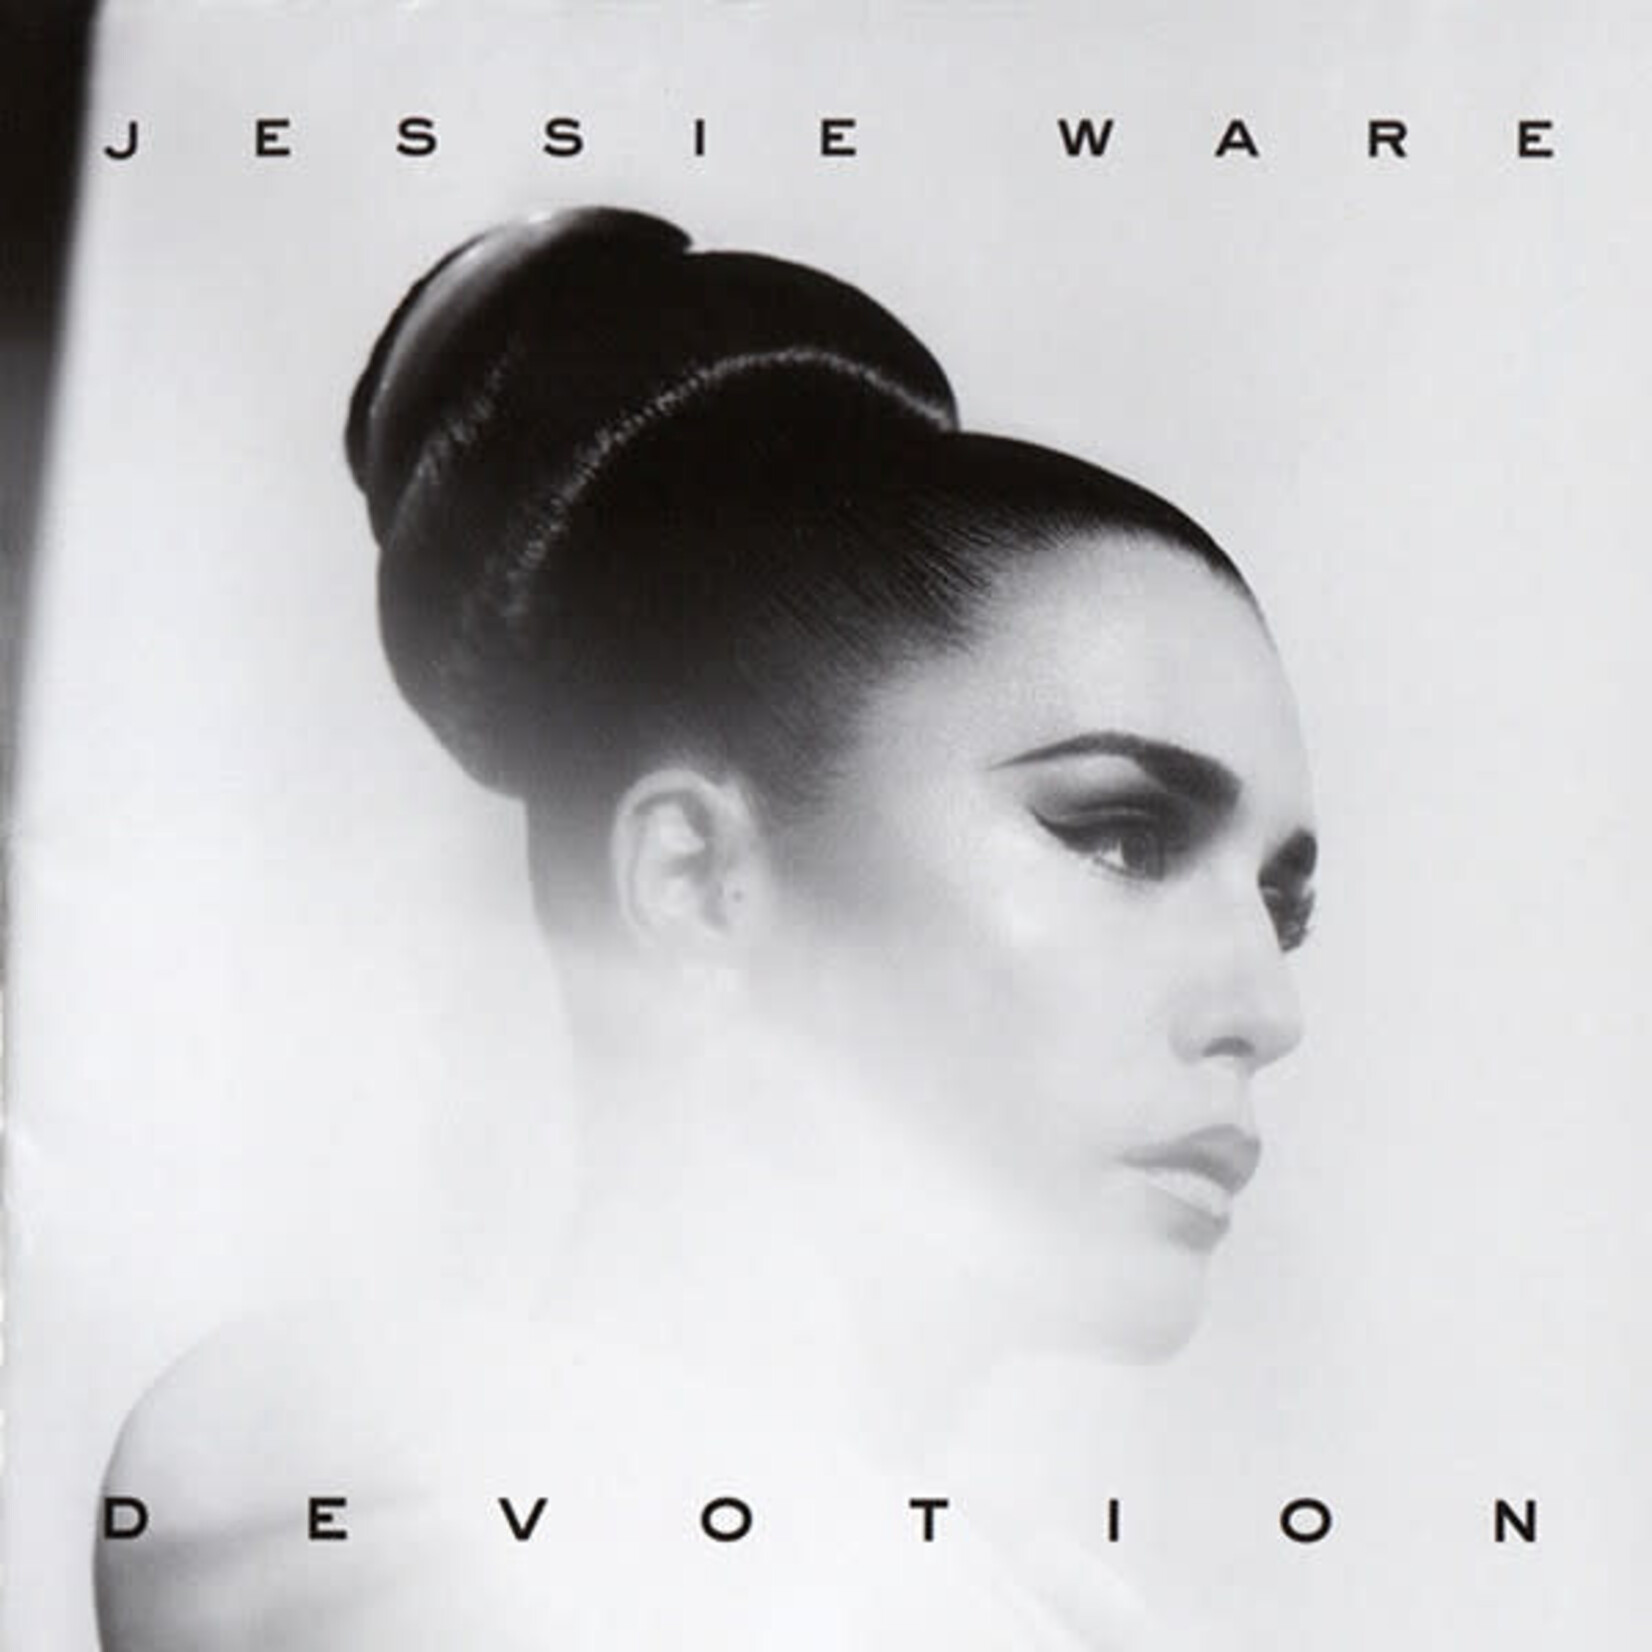 [New] Ware, Jessie: 2022RSD1 - Devotion The Gold Edition - 10th Anniversary Ed. (2LP, deluxe gatefold) [USM]